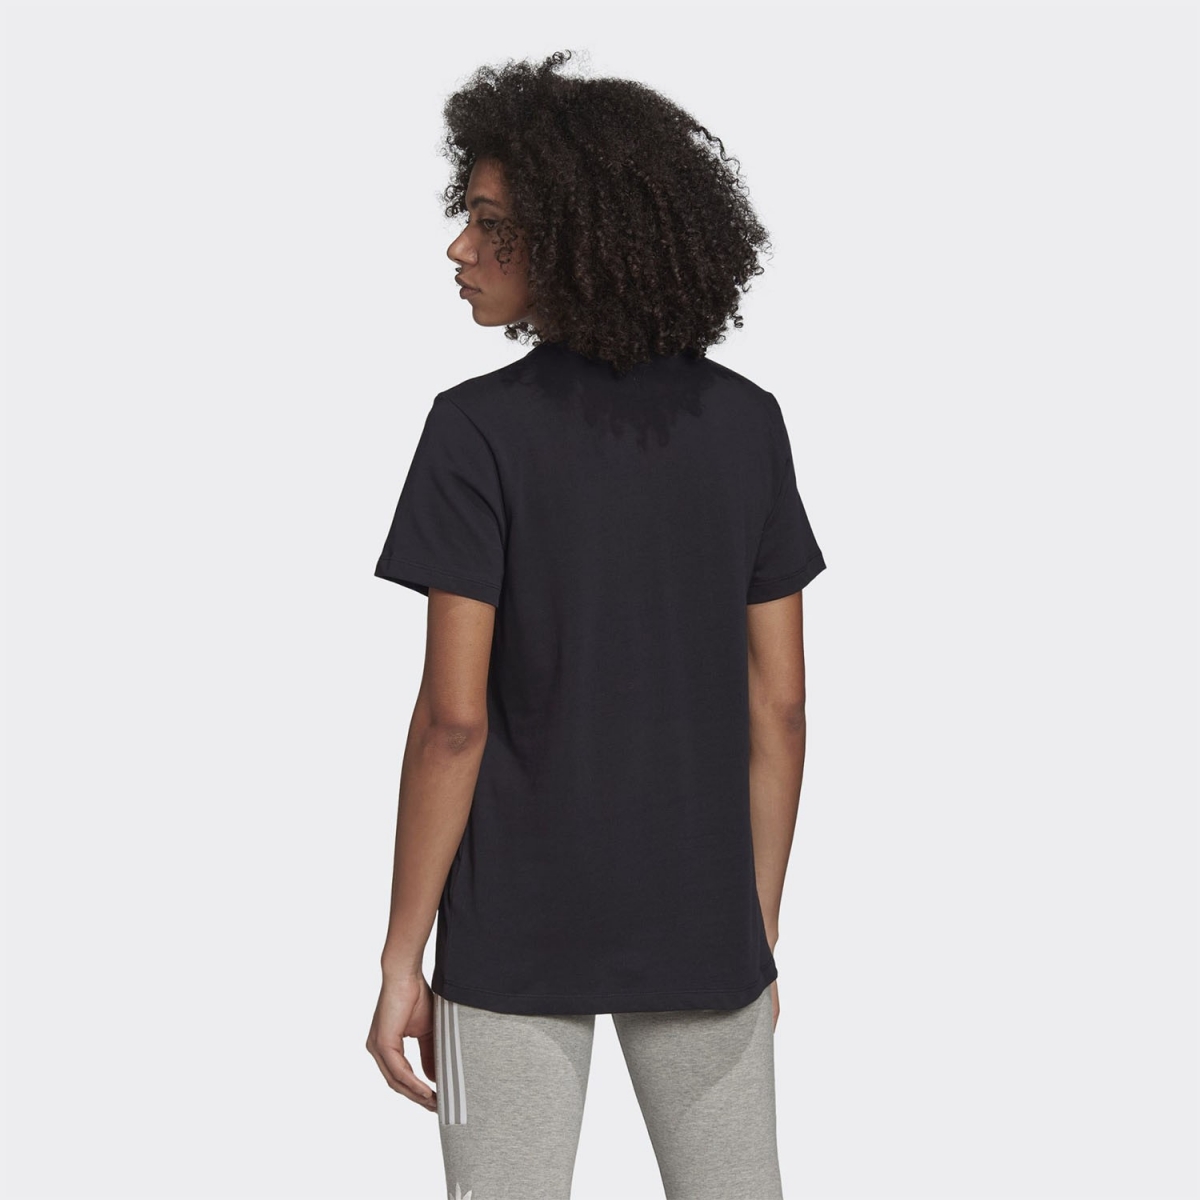 Flo Kadın Günlük T-Shirt T-Shirt Gd4281. 3